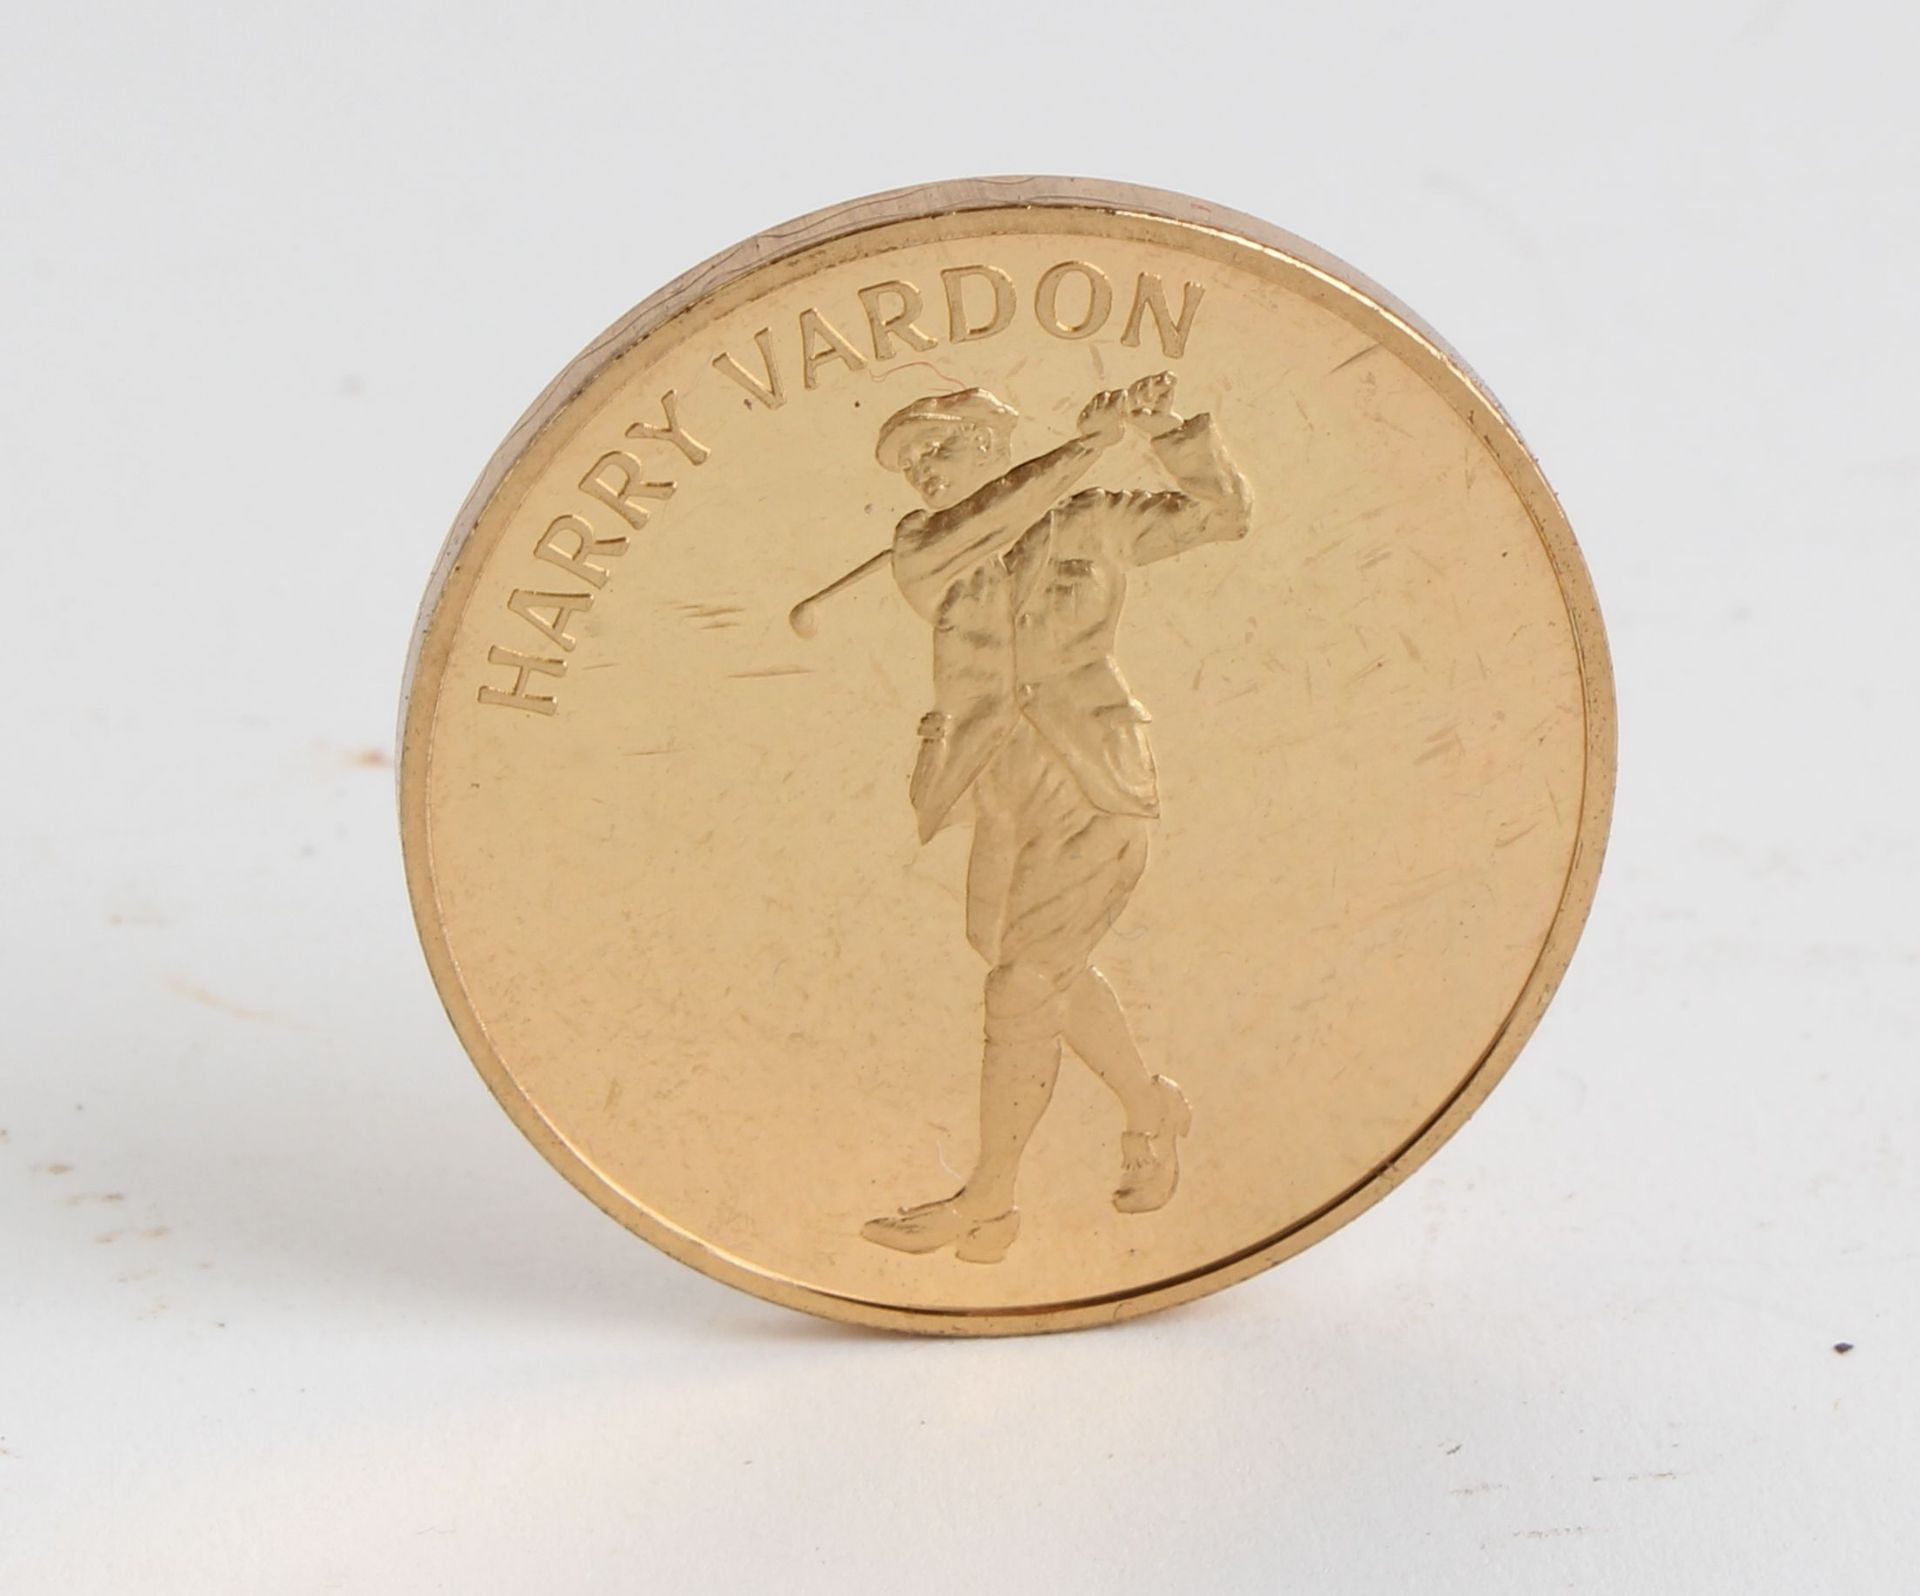 Harry Vardon 50th Anniversary commemorative medal